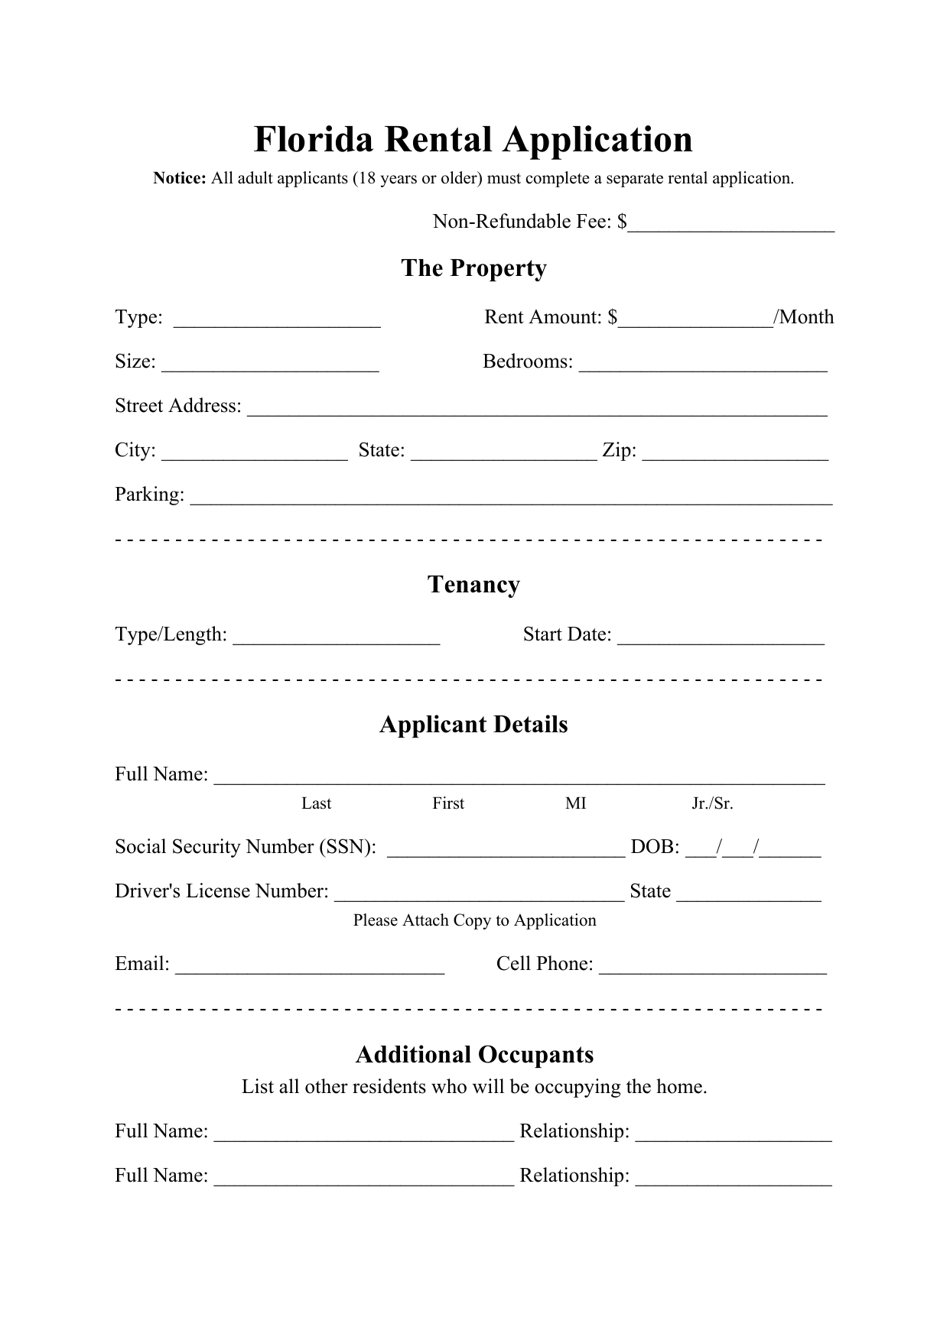 Rental Application Form - Florida, Page 1